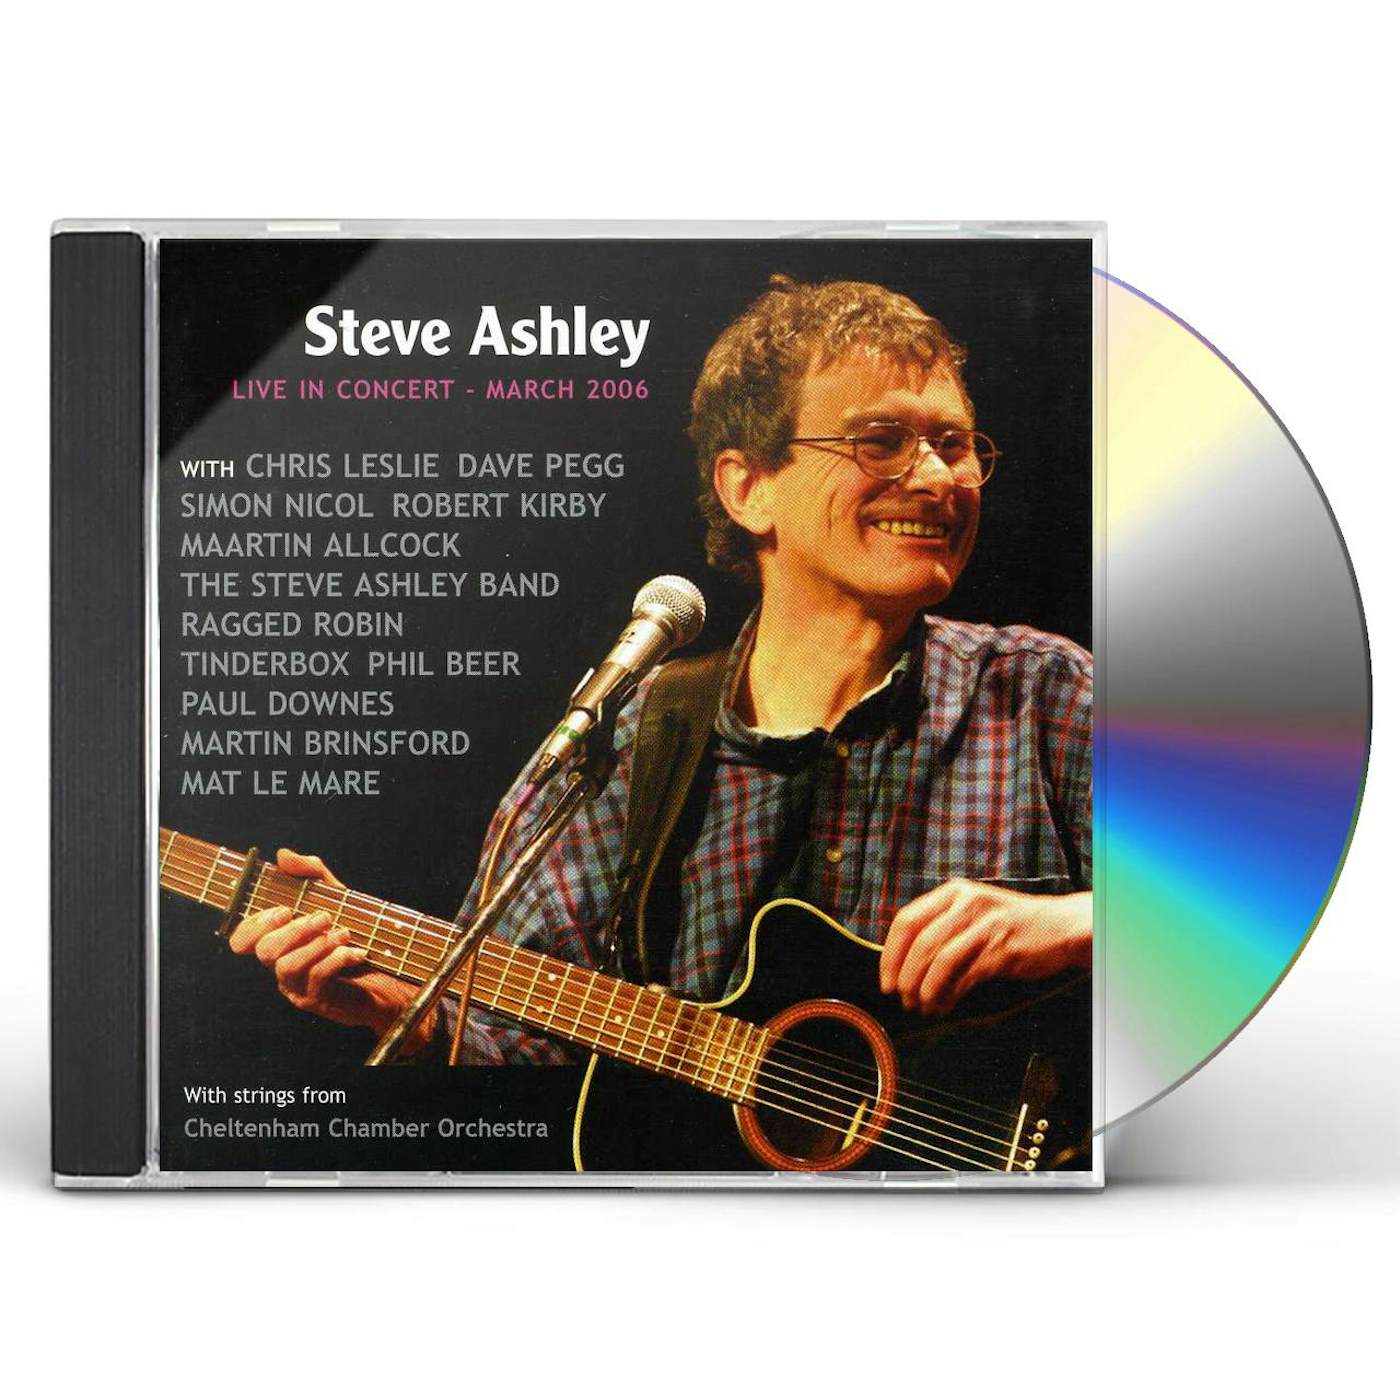 Steve Ashley LIVE IN CONCERT CD